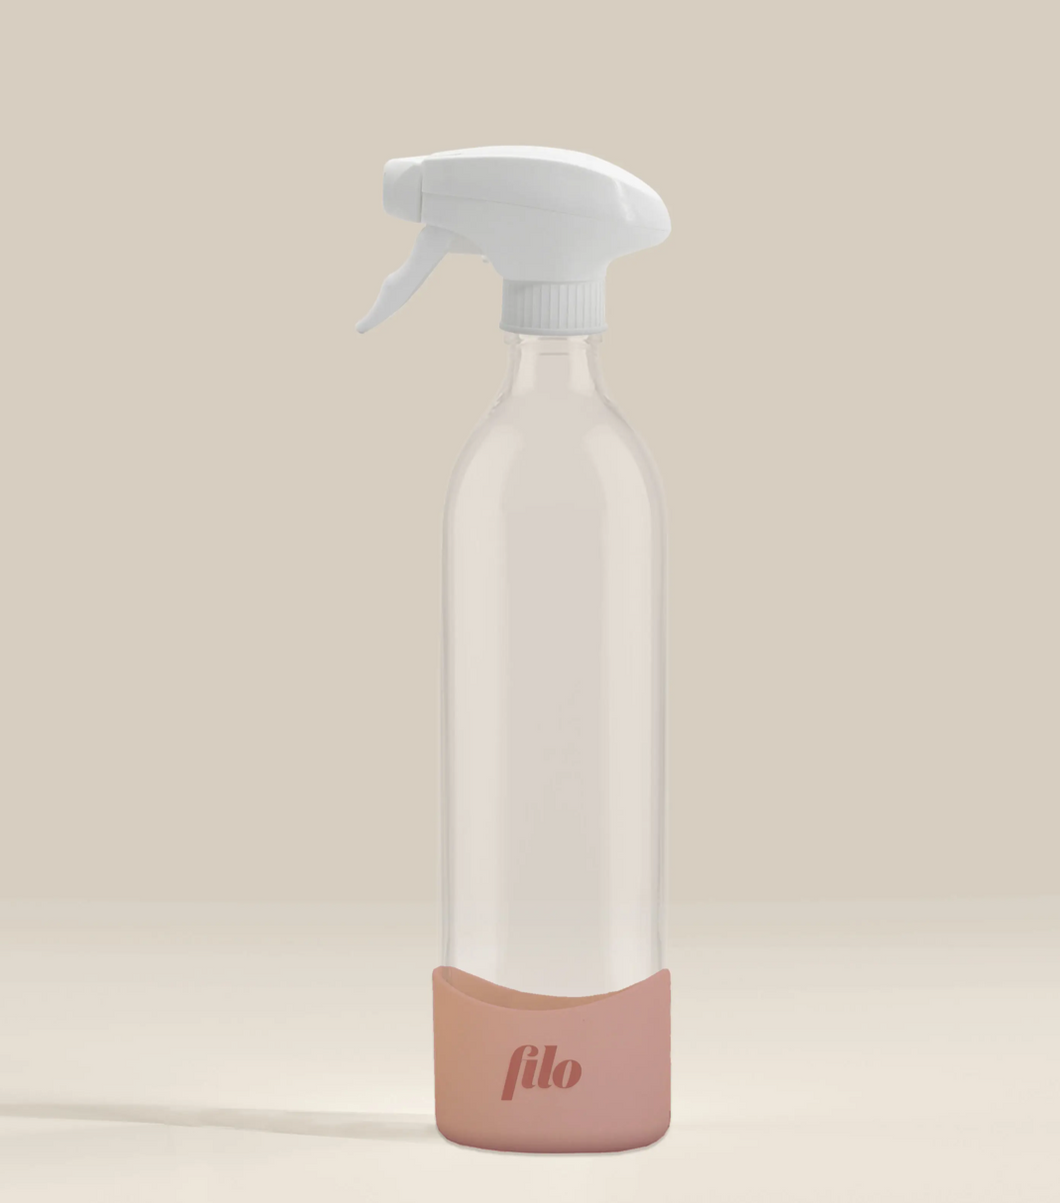 Filo, Spray Bottles